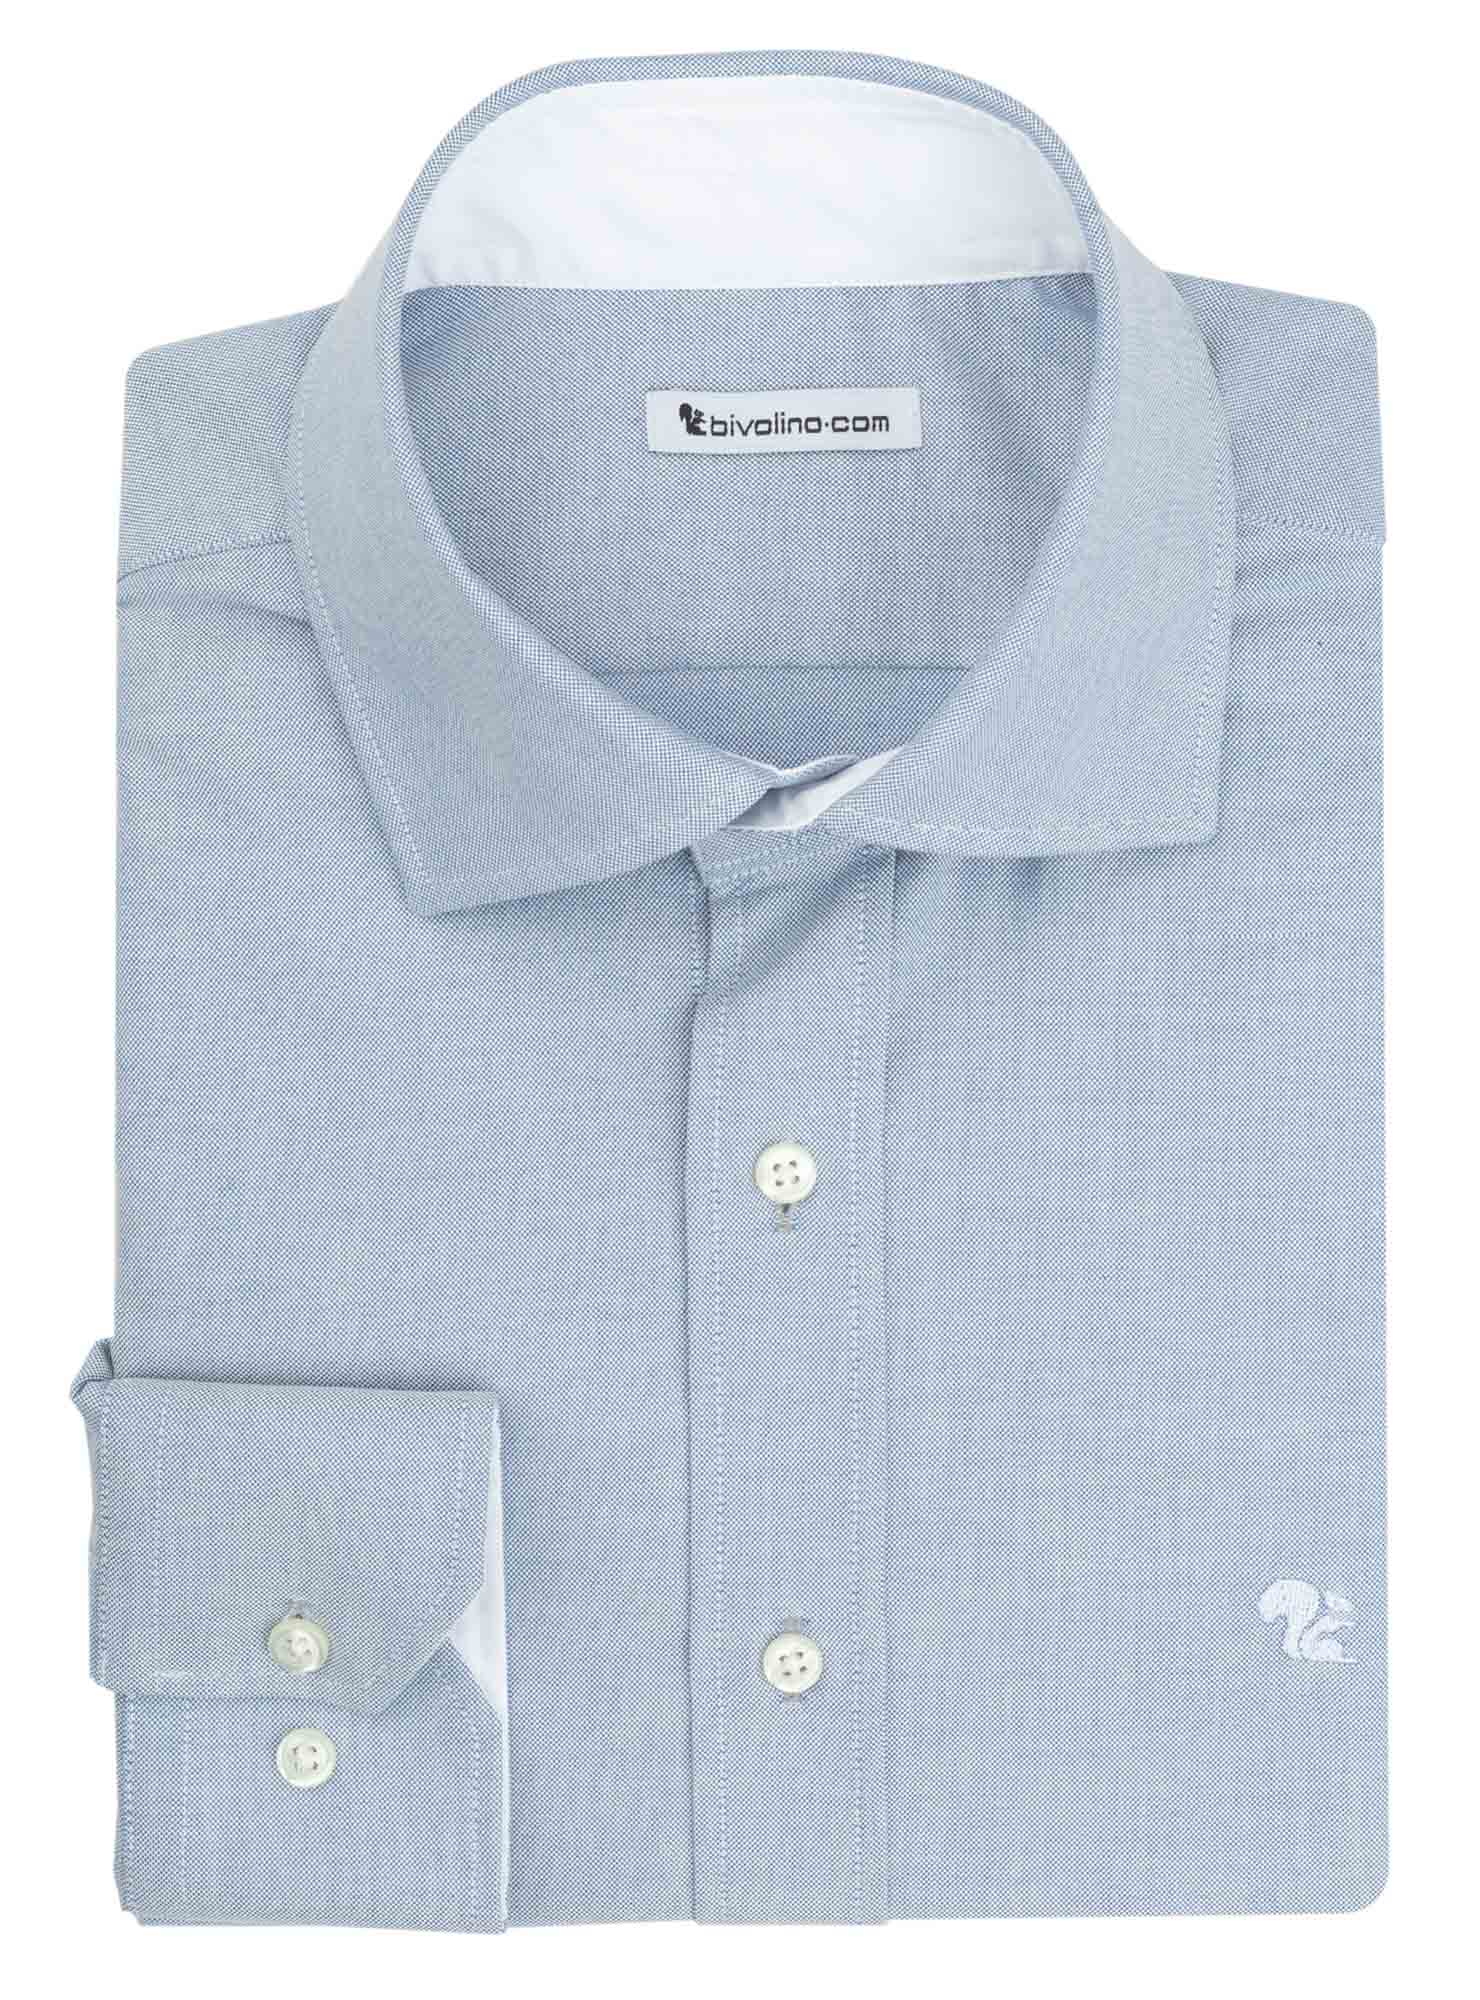 BOLOGNA - chemise homme Thomas Mason 2fold oxford d'hiver épais bleu - AMERICANOXFORD 7